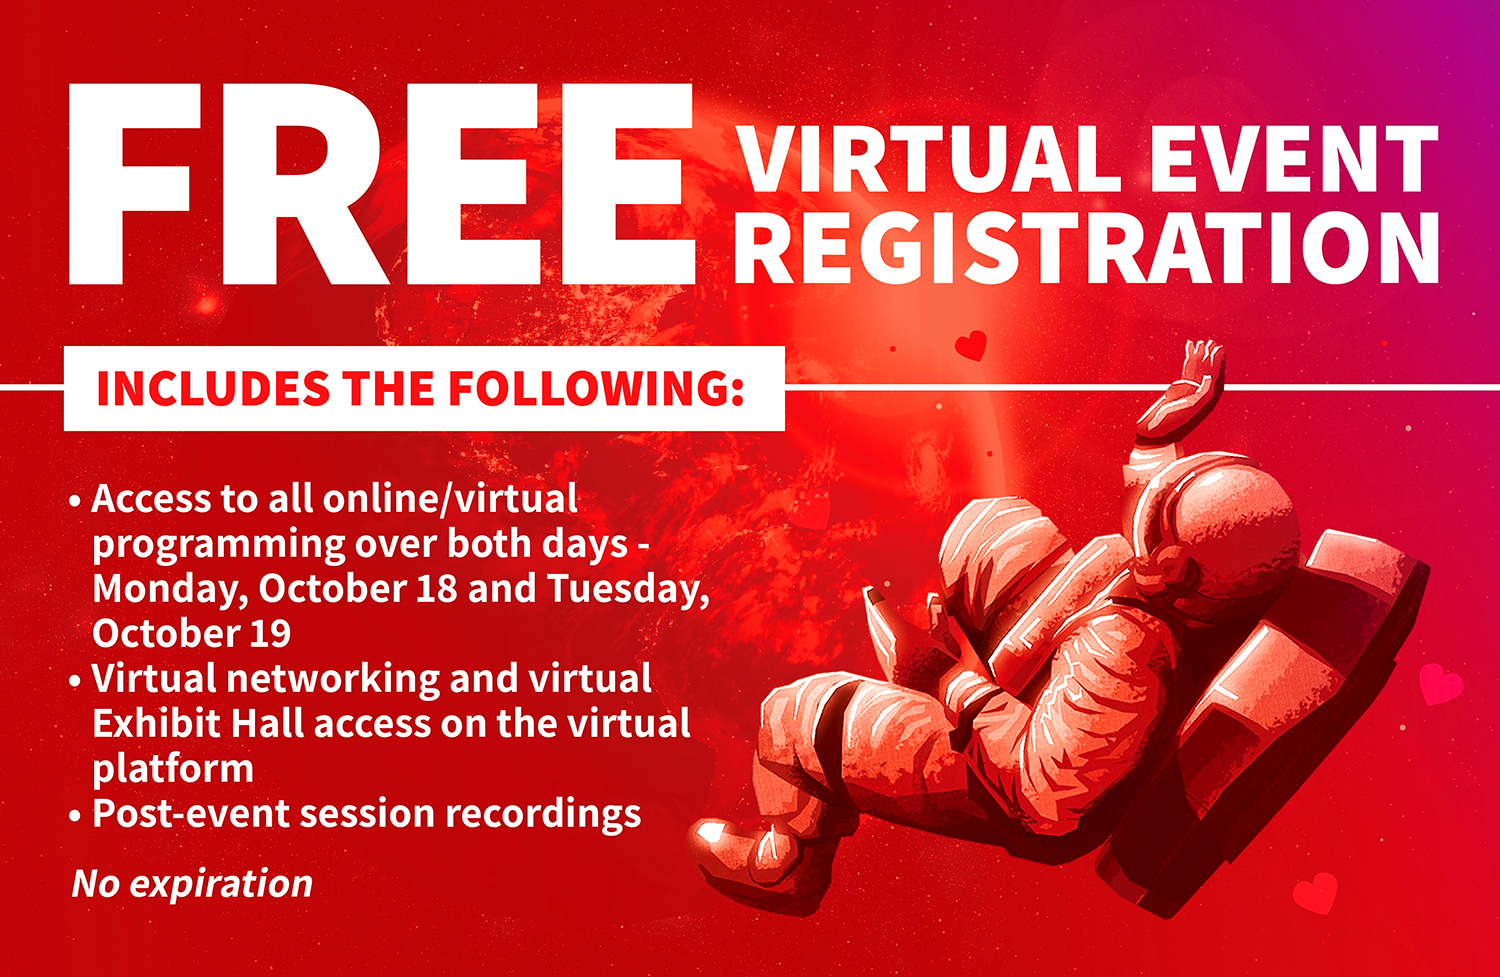 FREE Virtual Event Registration